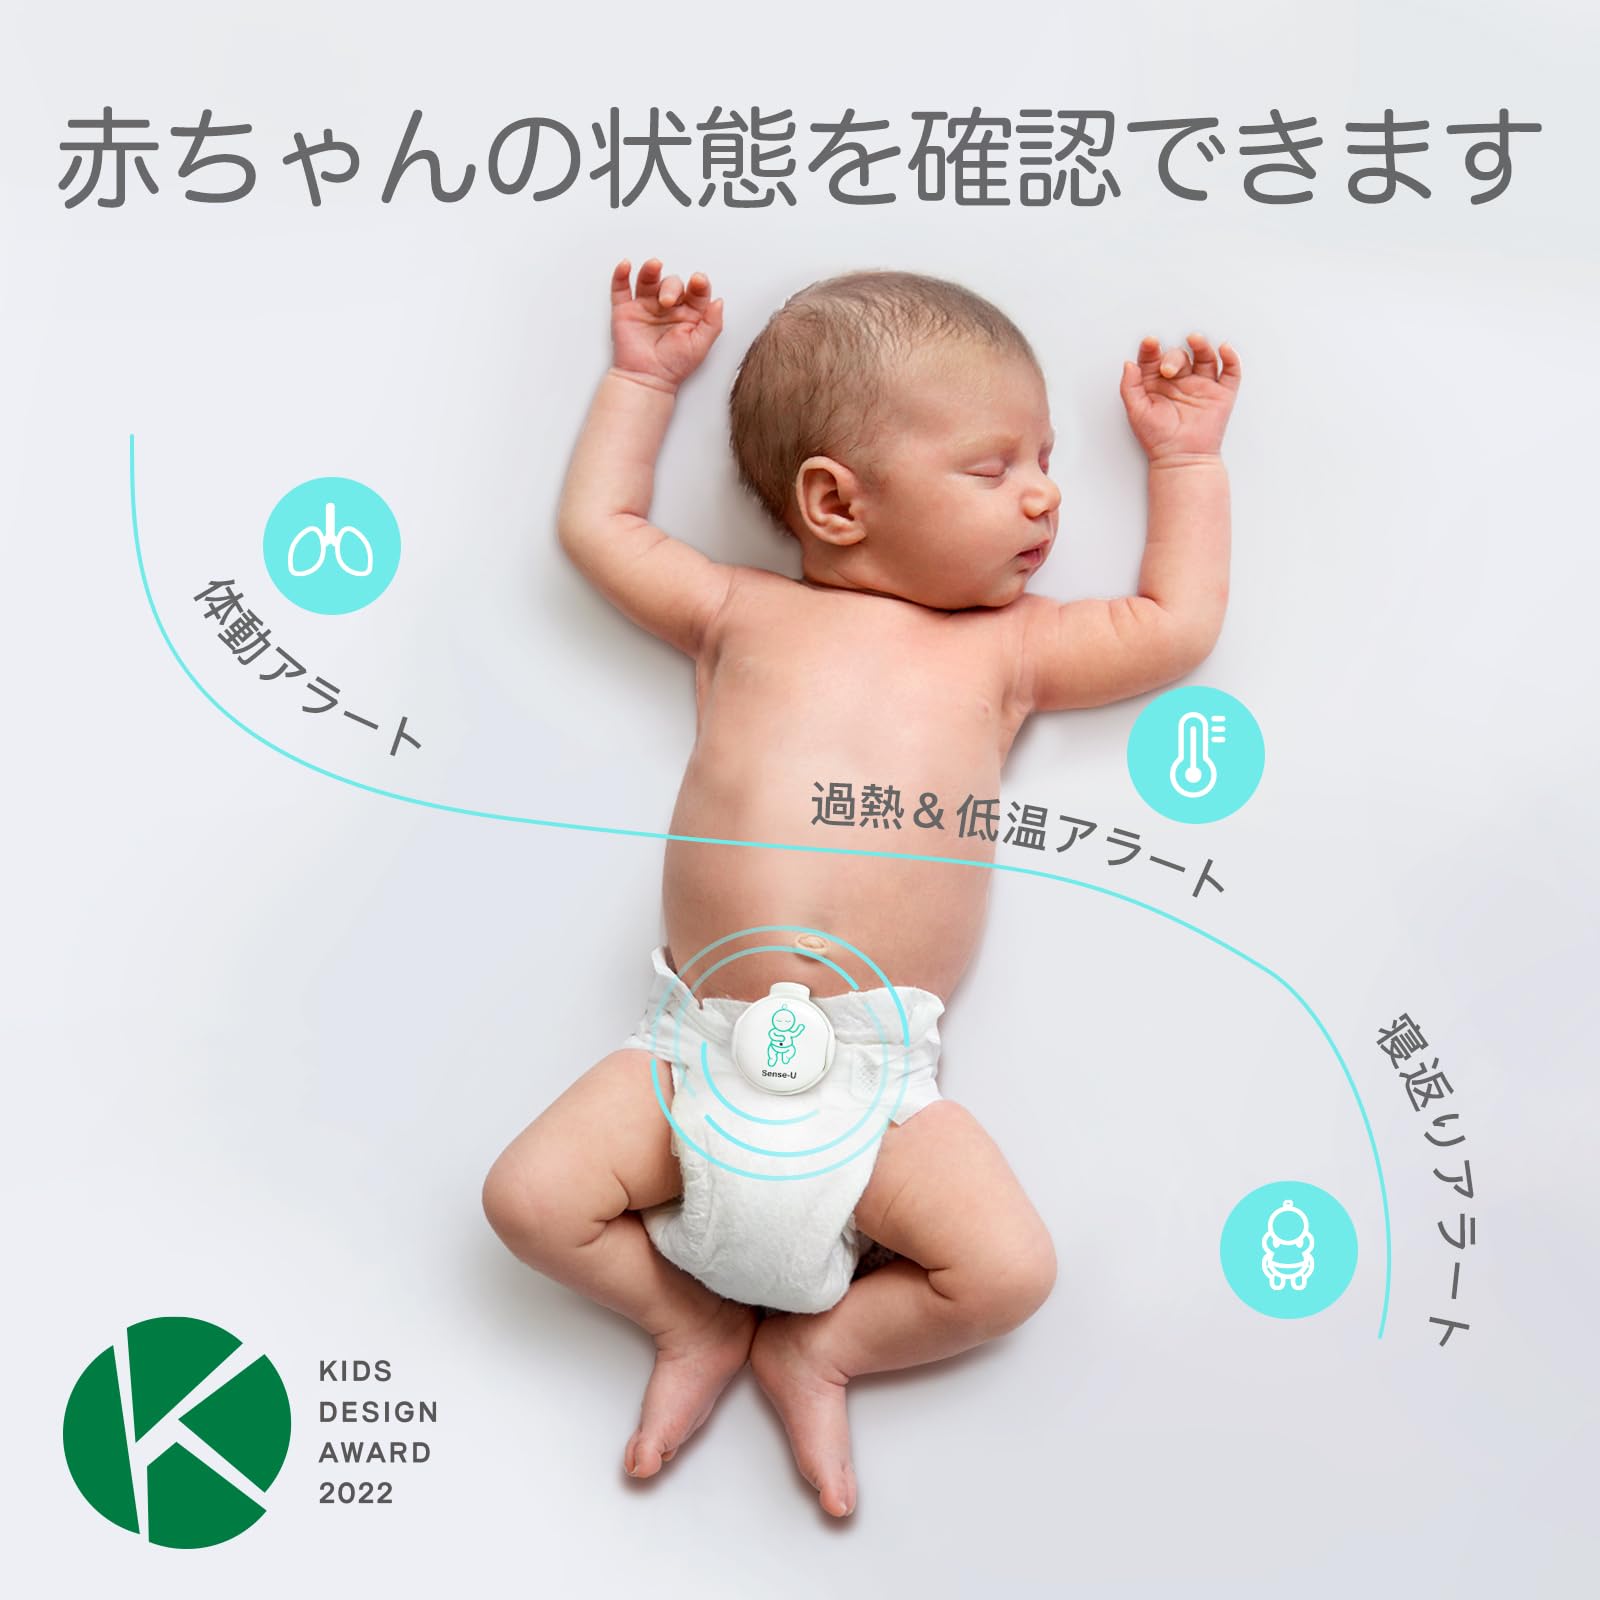 Mua Sense-U 一般医療機器 ベビーセンサー 赤ちゃん 体動センサ お子様 